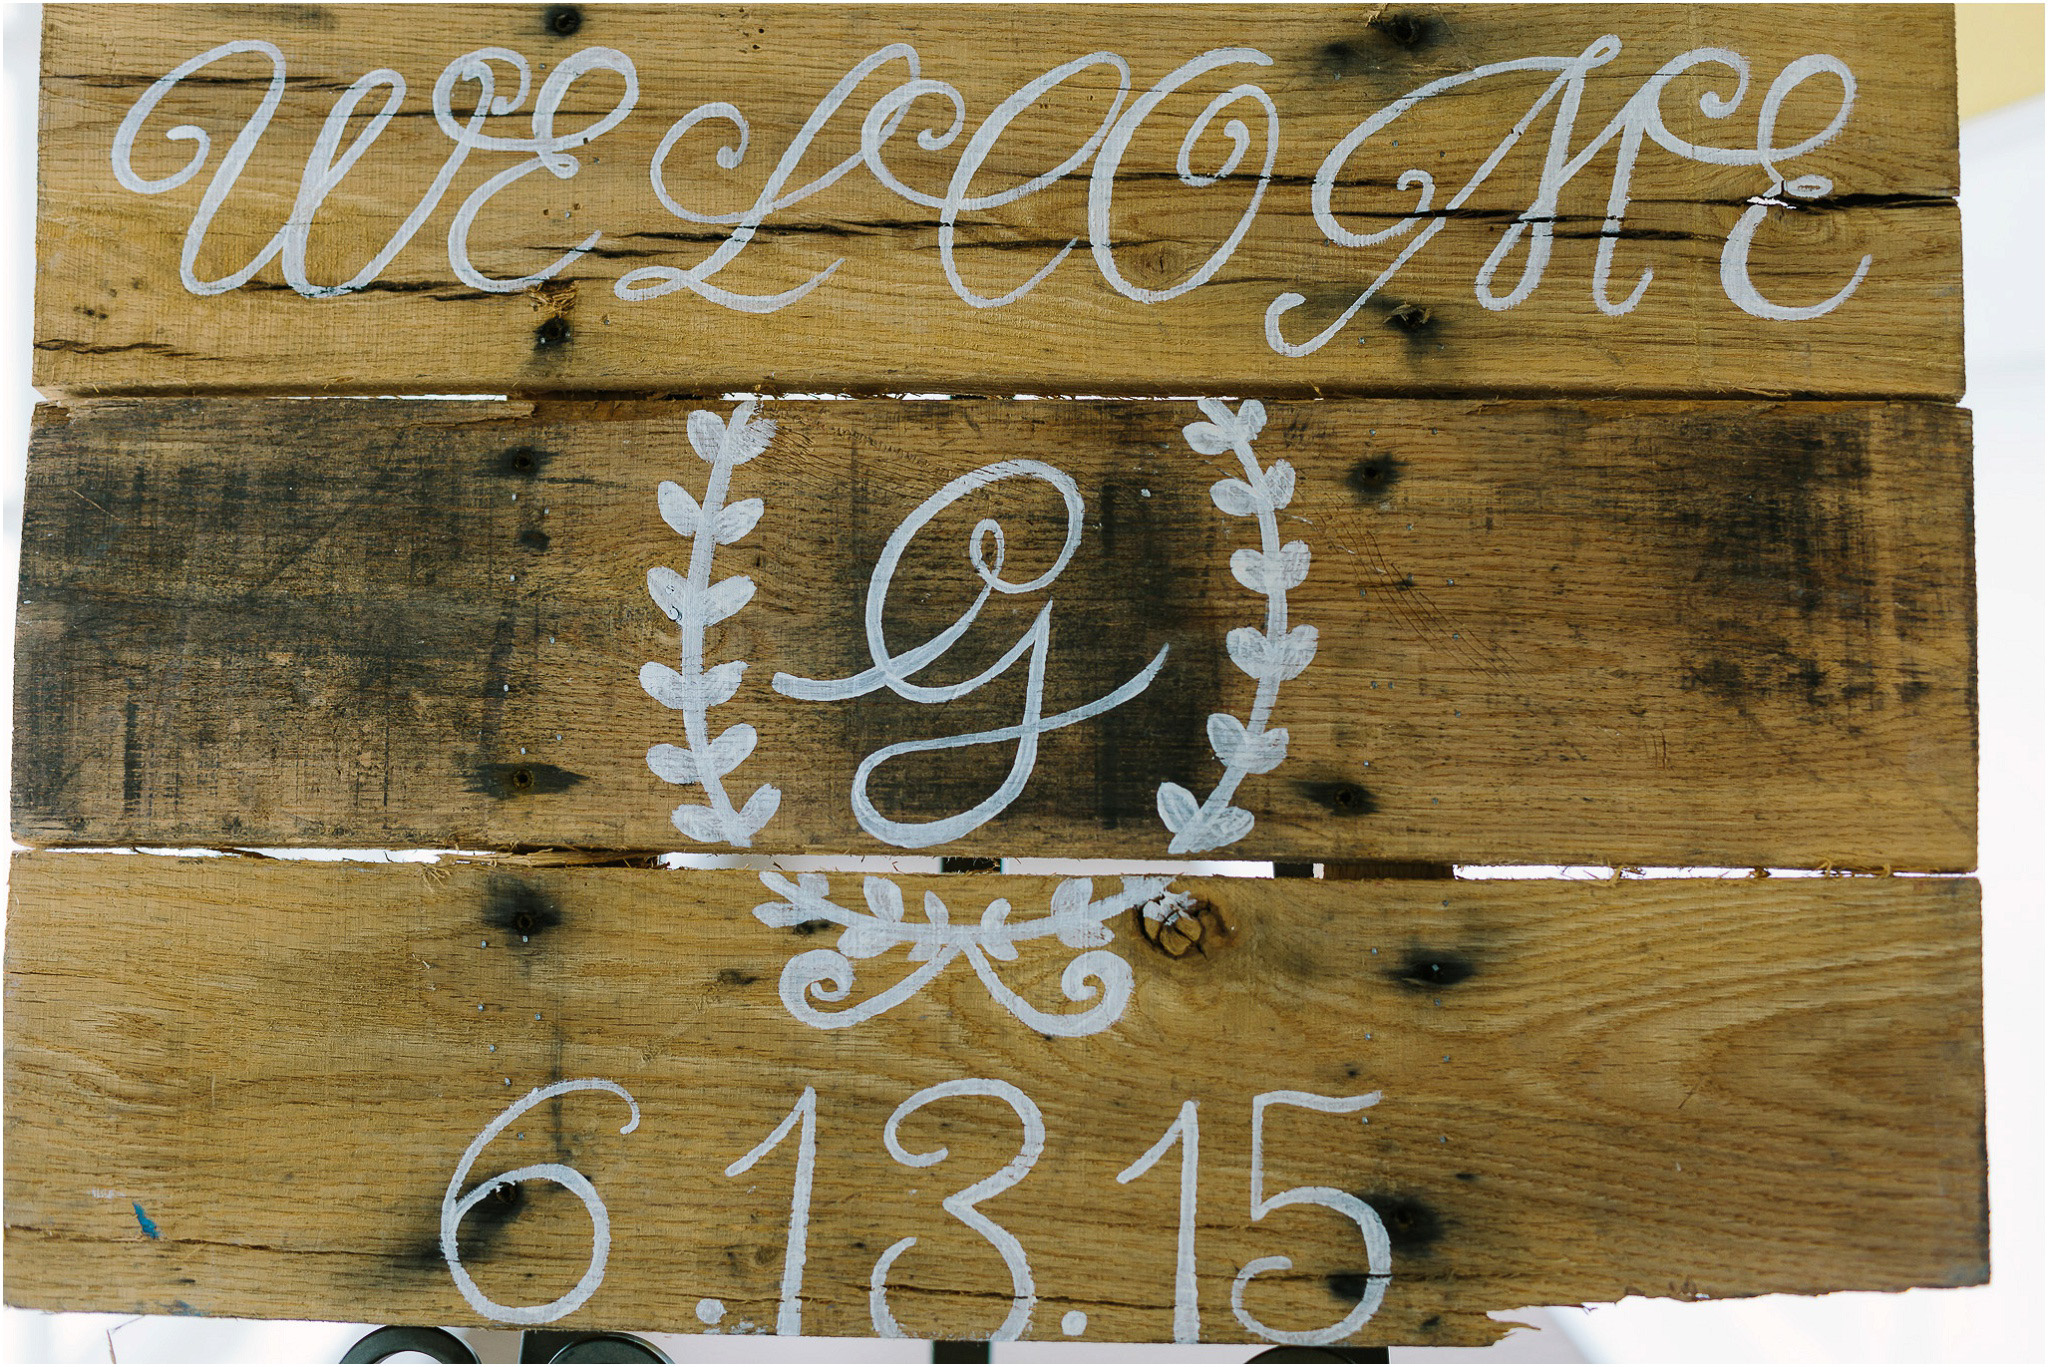 Handmade wedding date wooden sign welcoming guests